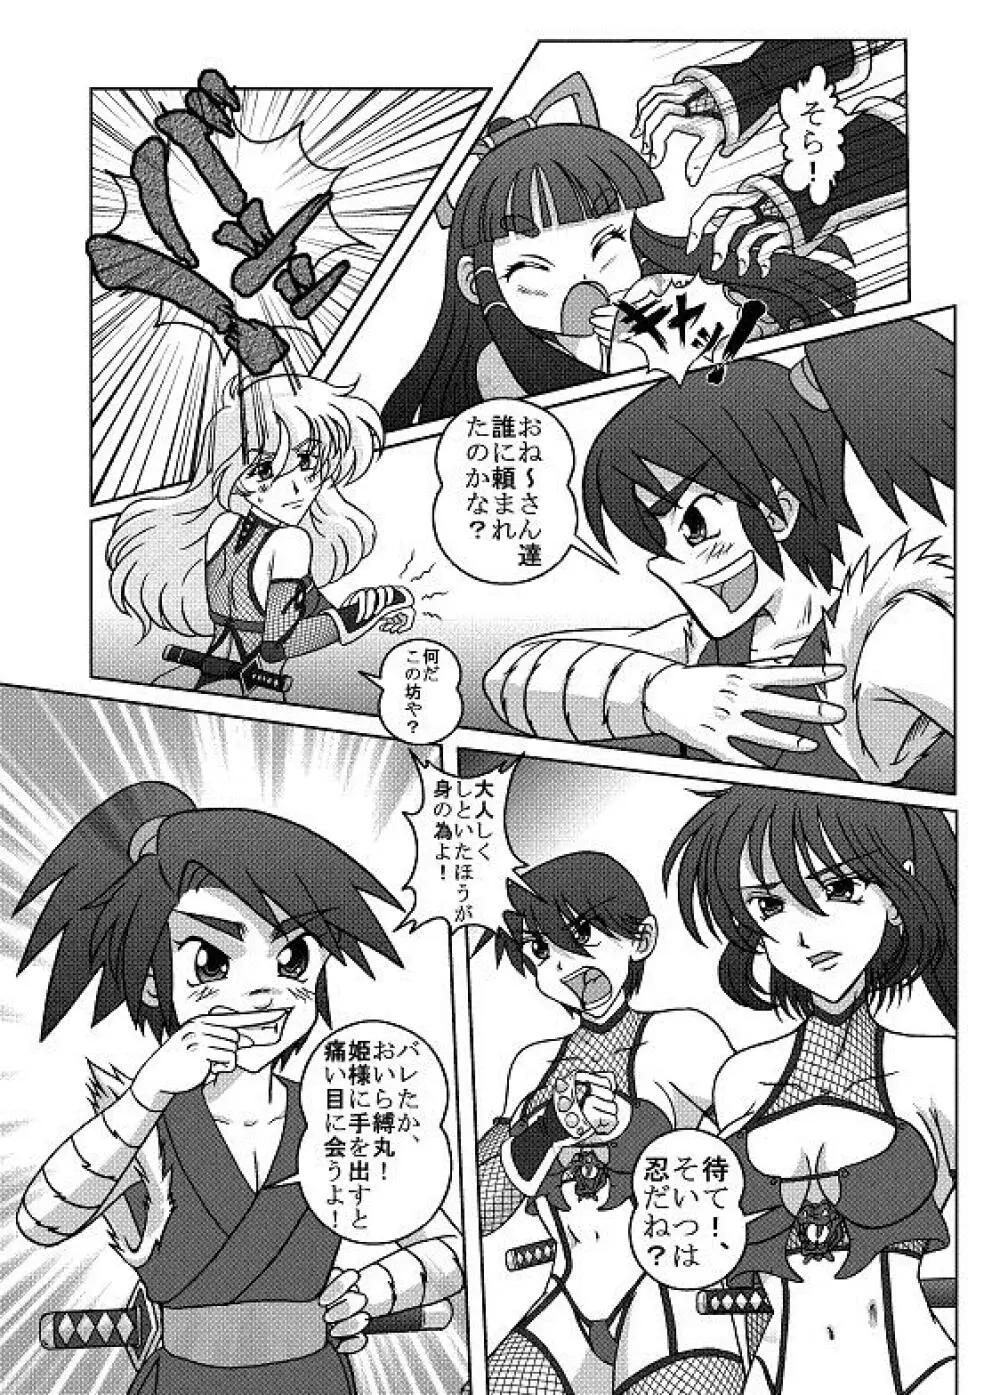 Same-themed manga about kid fighting female ninjas from japanese imageboard. 35ページ